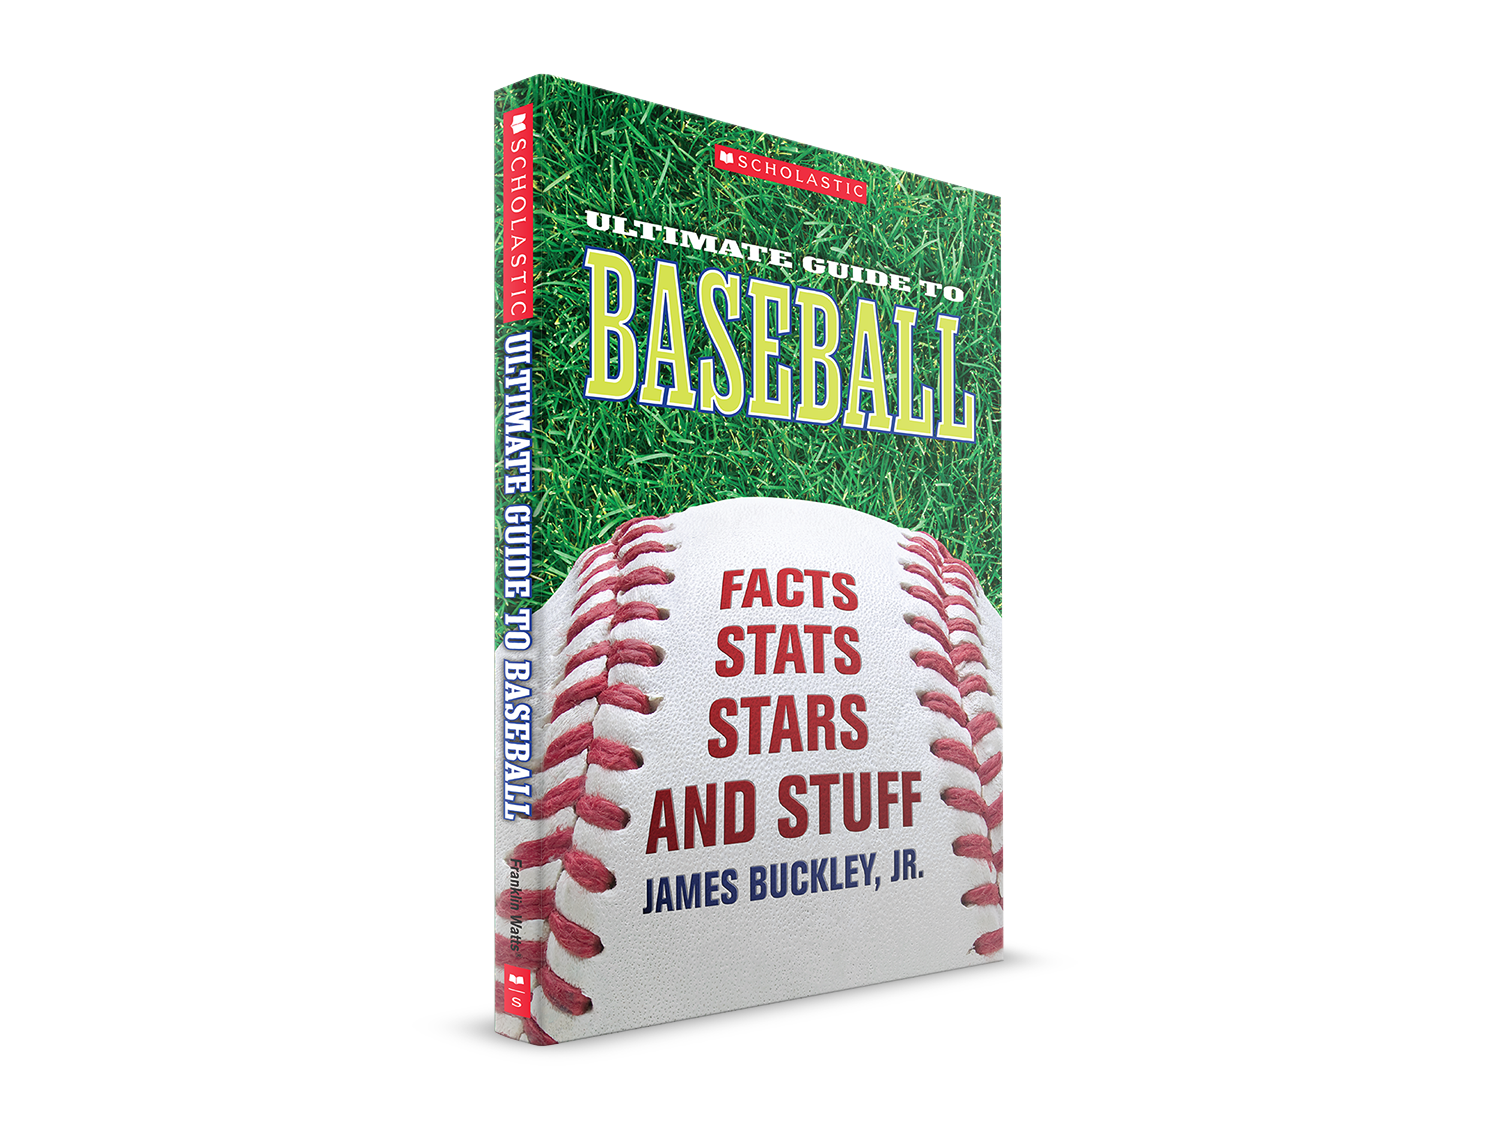 ultspo-baseball-children's-trade-nonfiction-book-cover2.png